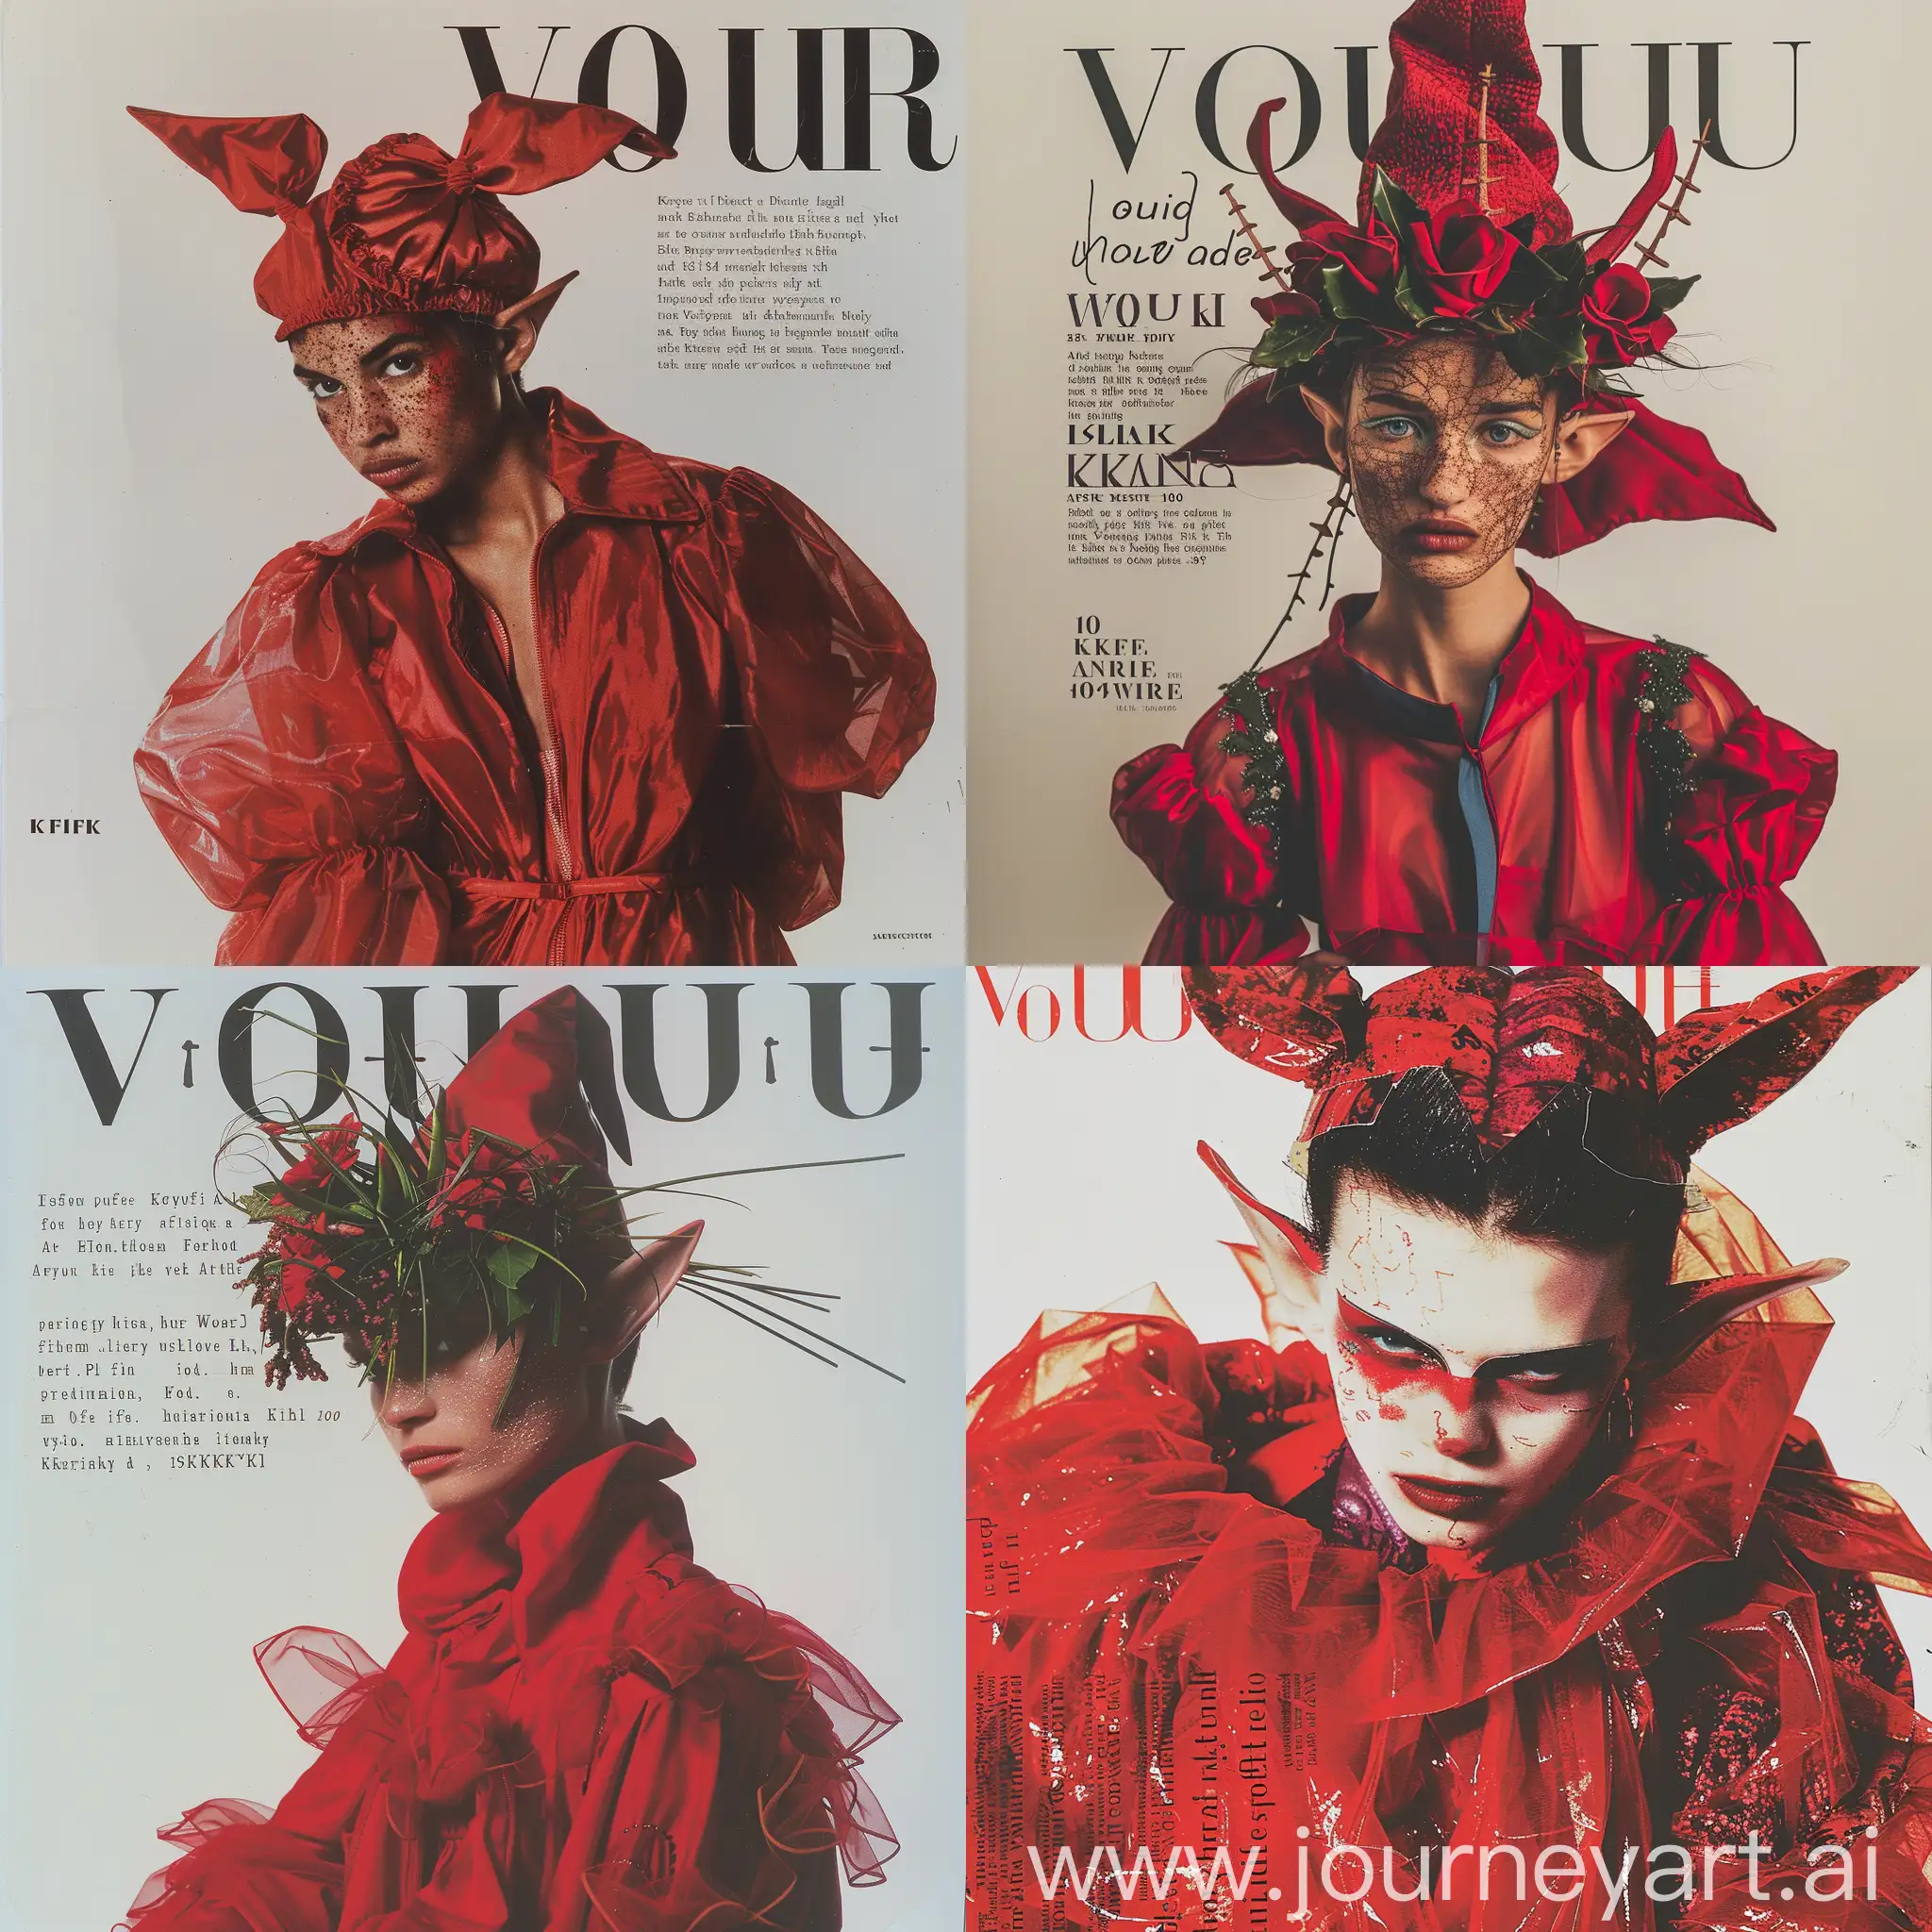 90s-Greek-Model-in-Elf-Costume-Collage-PostPunk-Fashion-Magazine-Cover